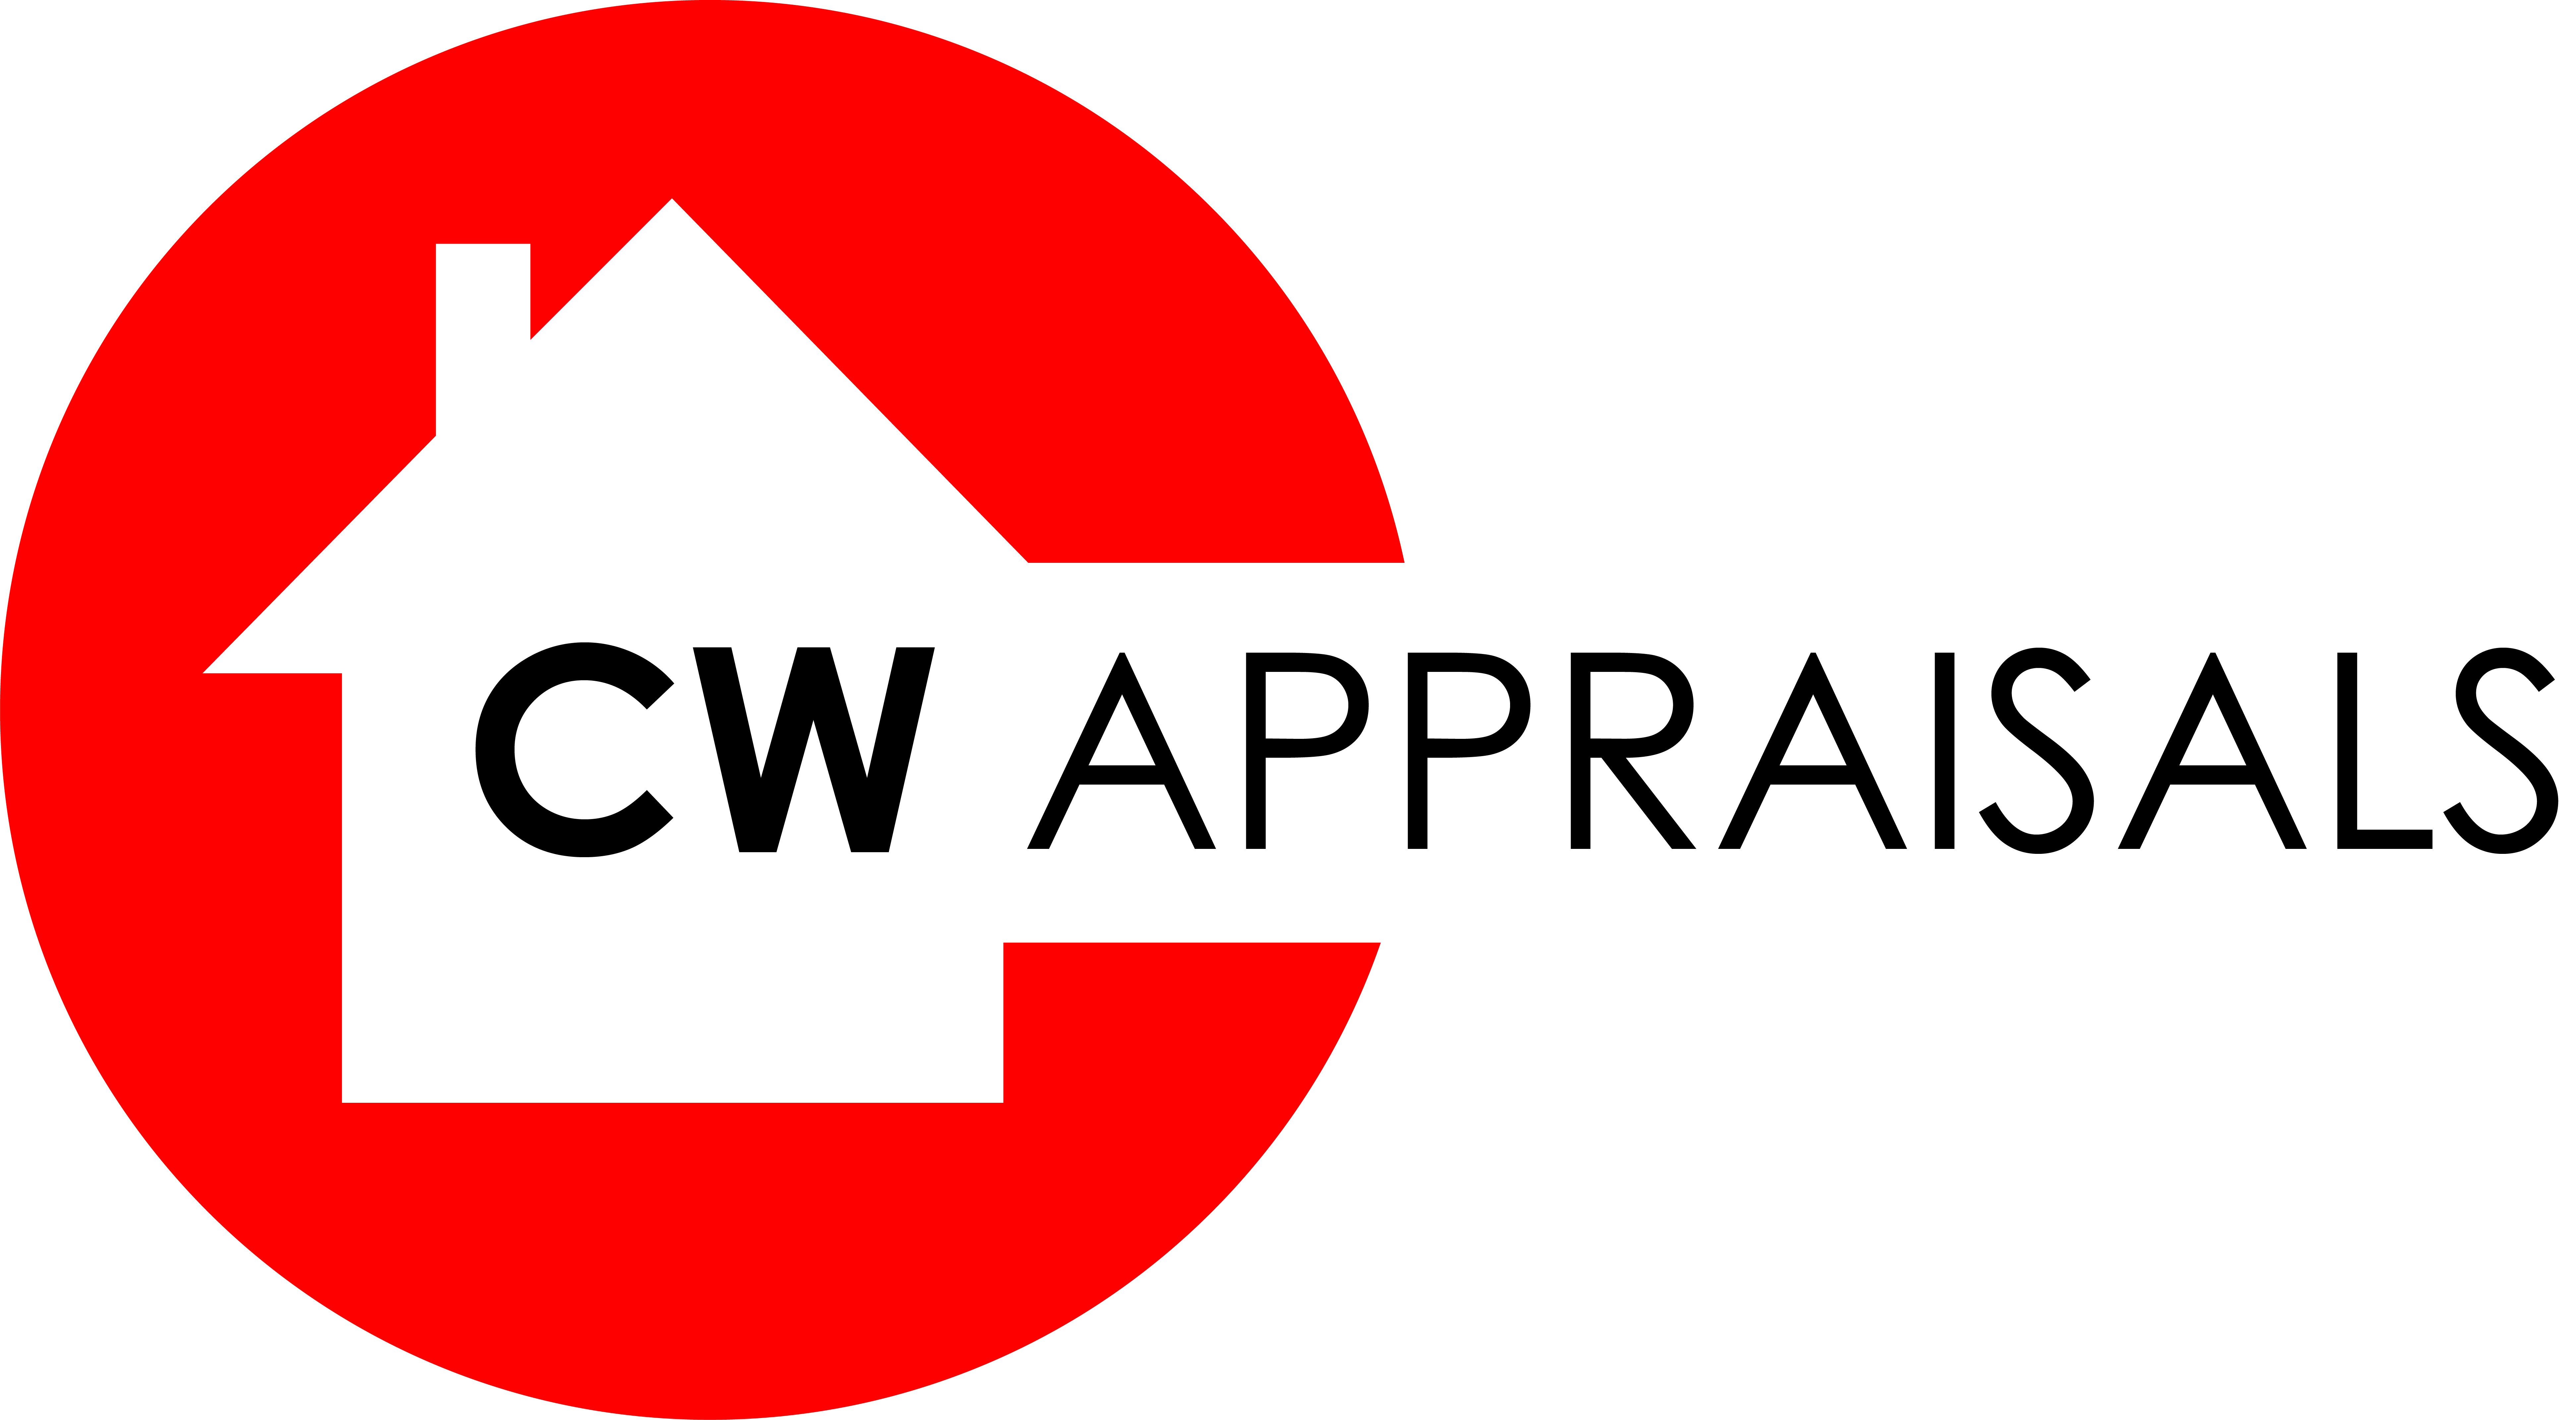 CW Appraisals Logo PNG Transparent